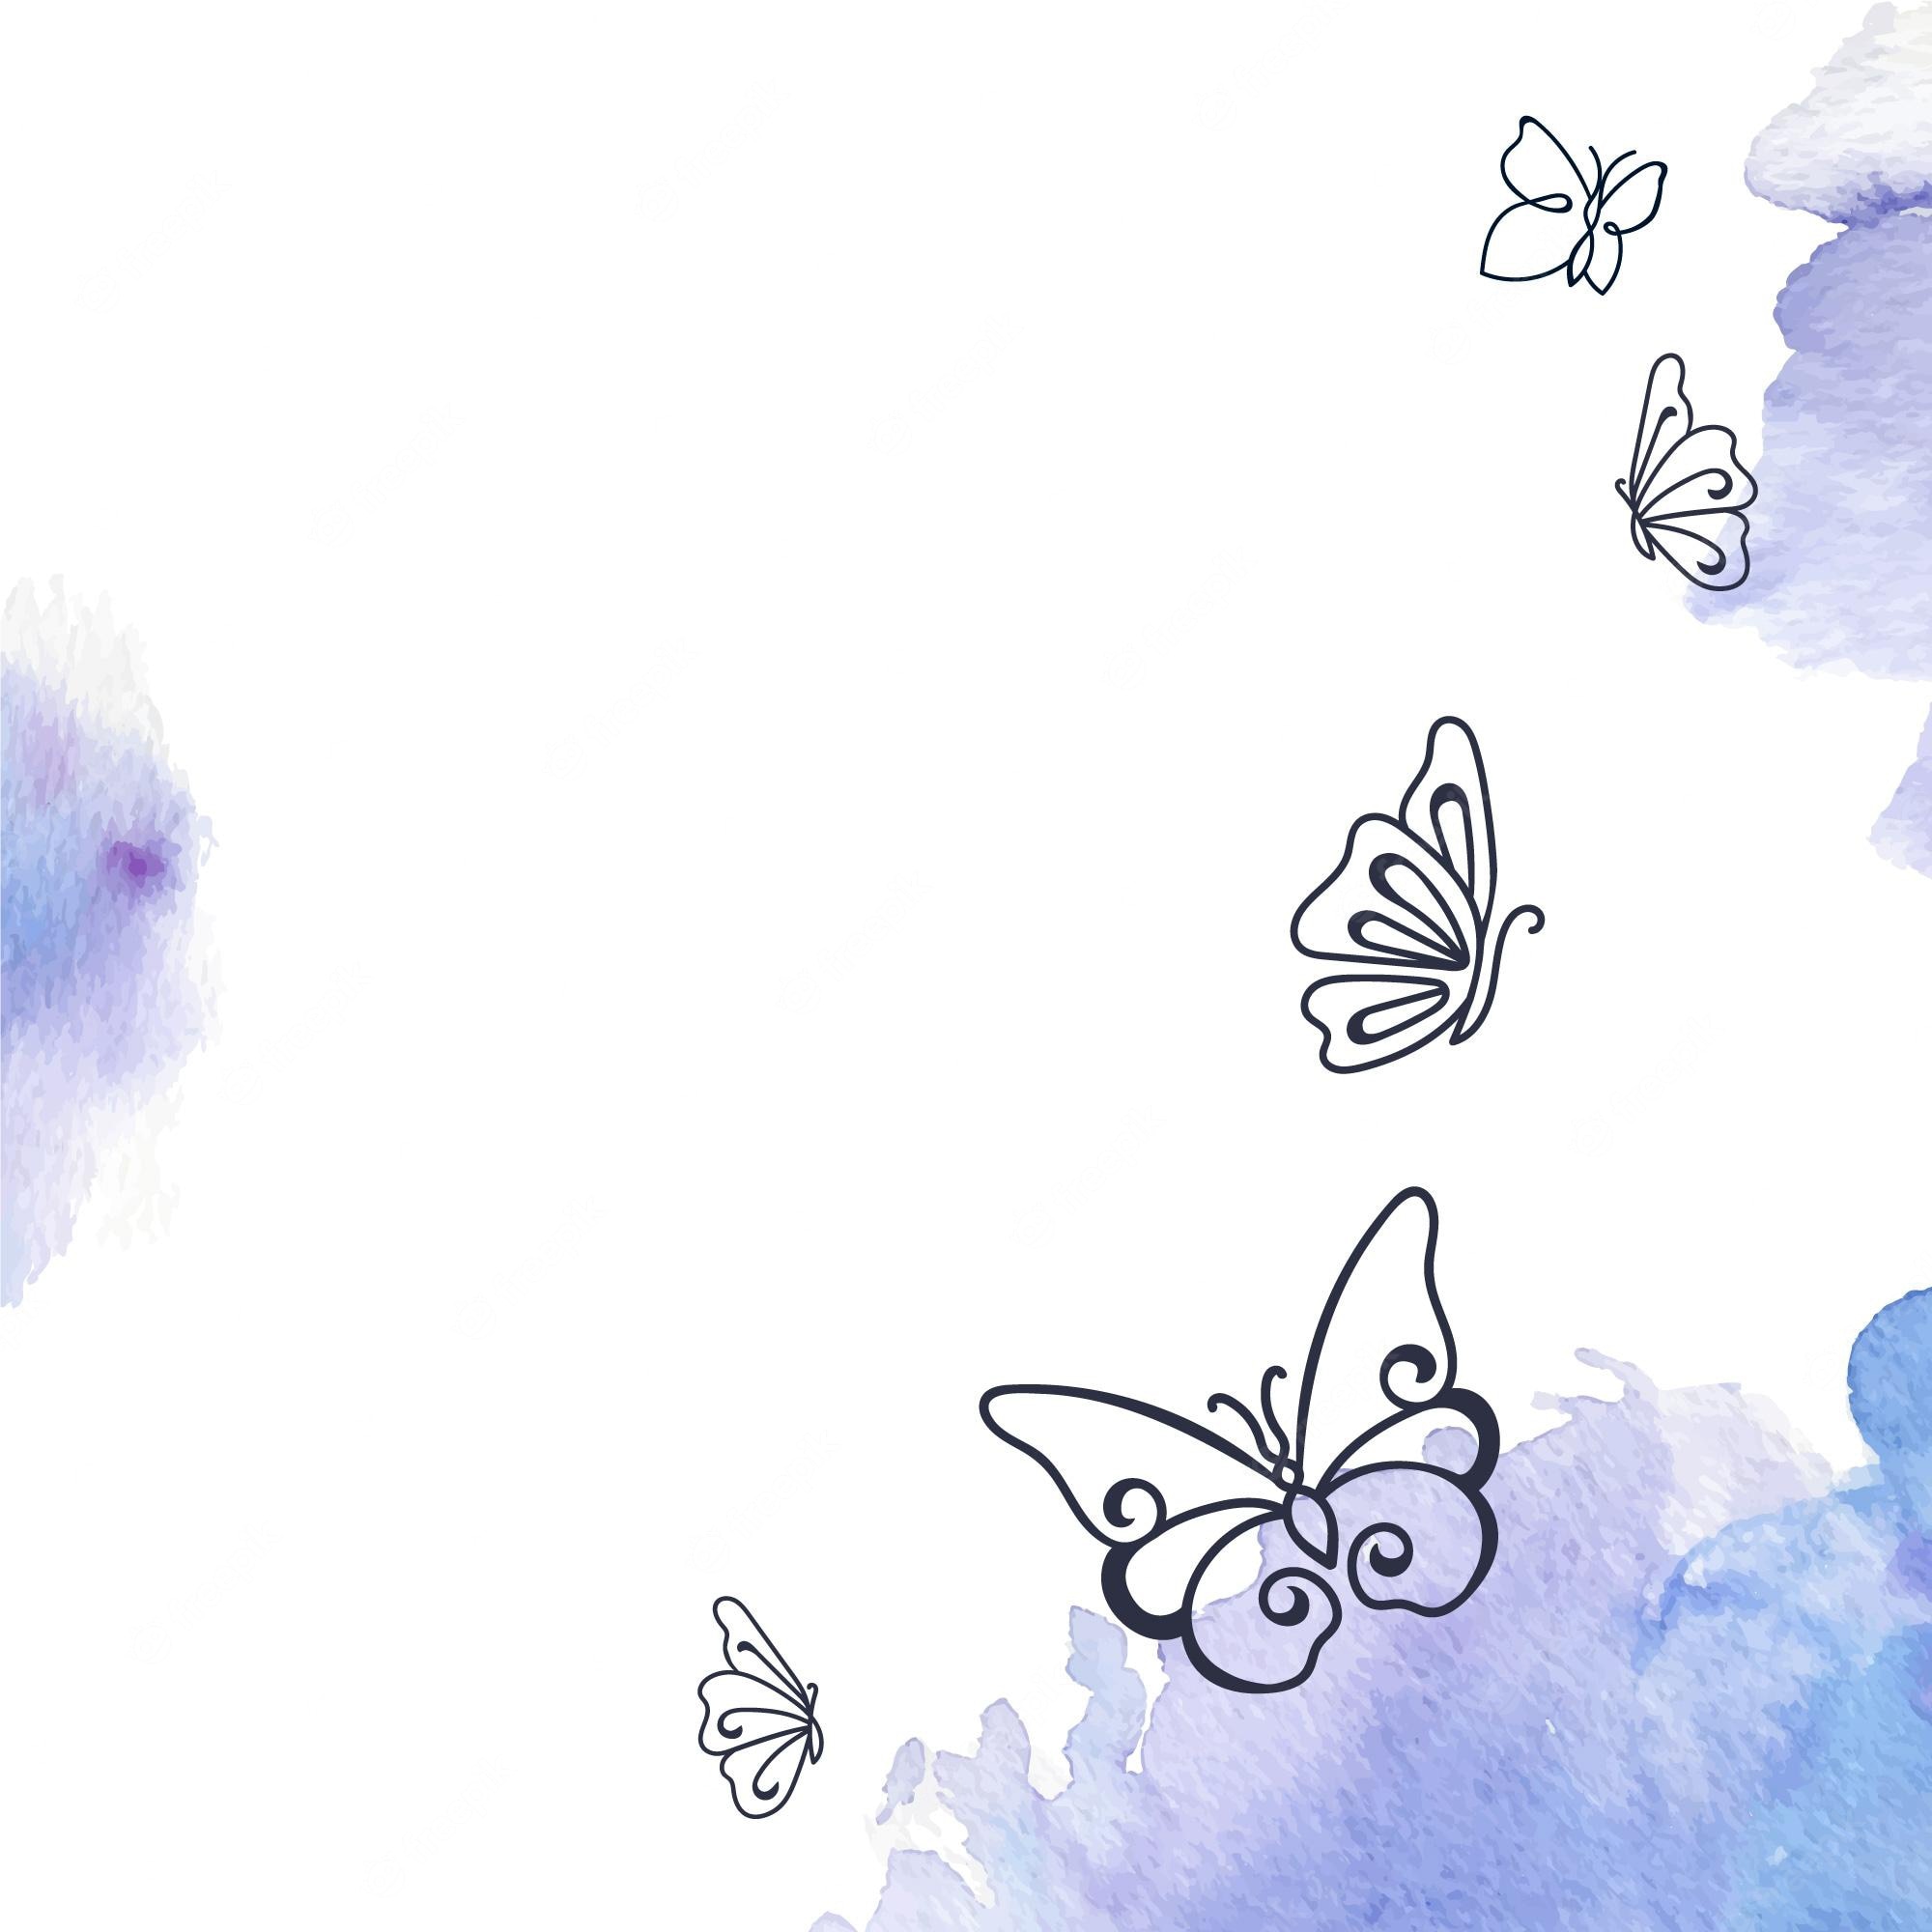 Cute Blue Butterfly Wallpaper Image. Free Vectors, & PSD